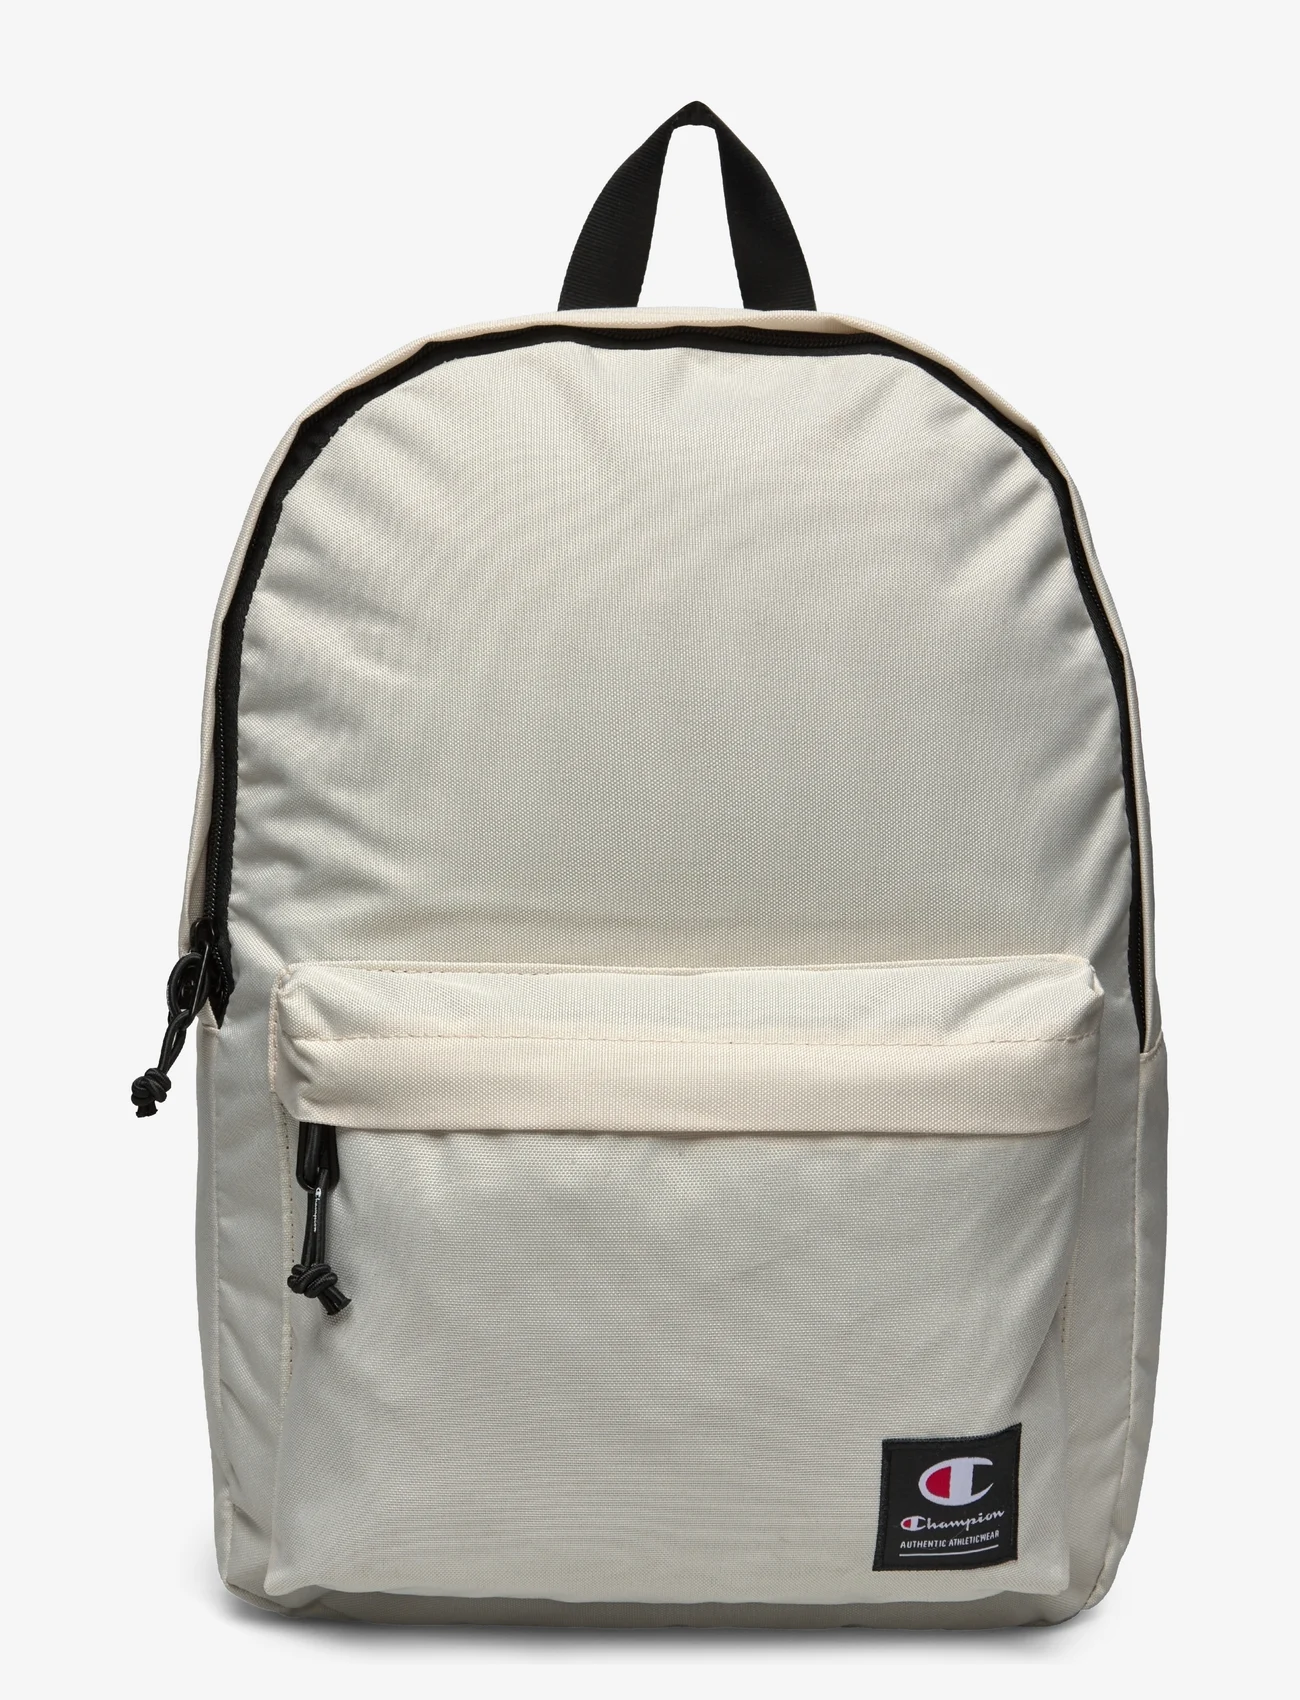 Champion - Backpack - lägsta priserna - whitecap gray - 0